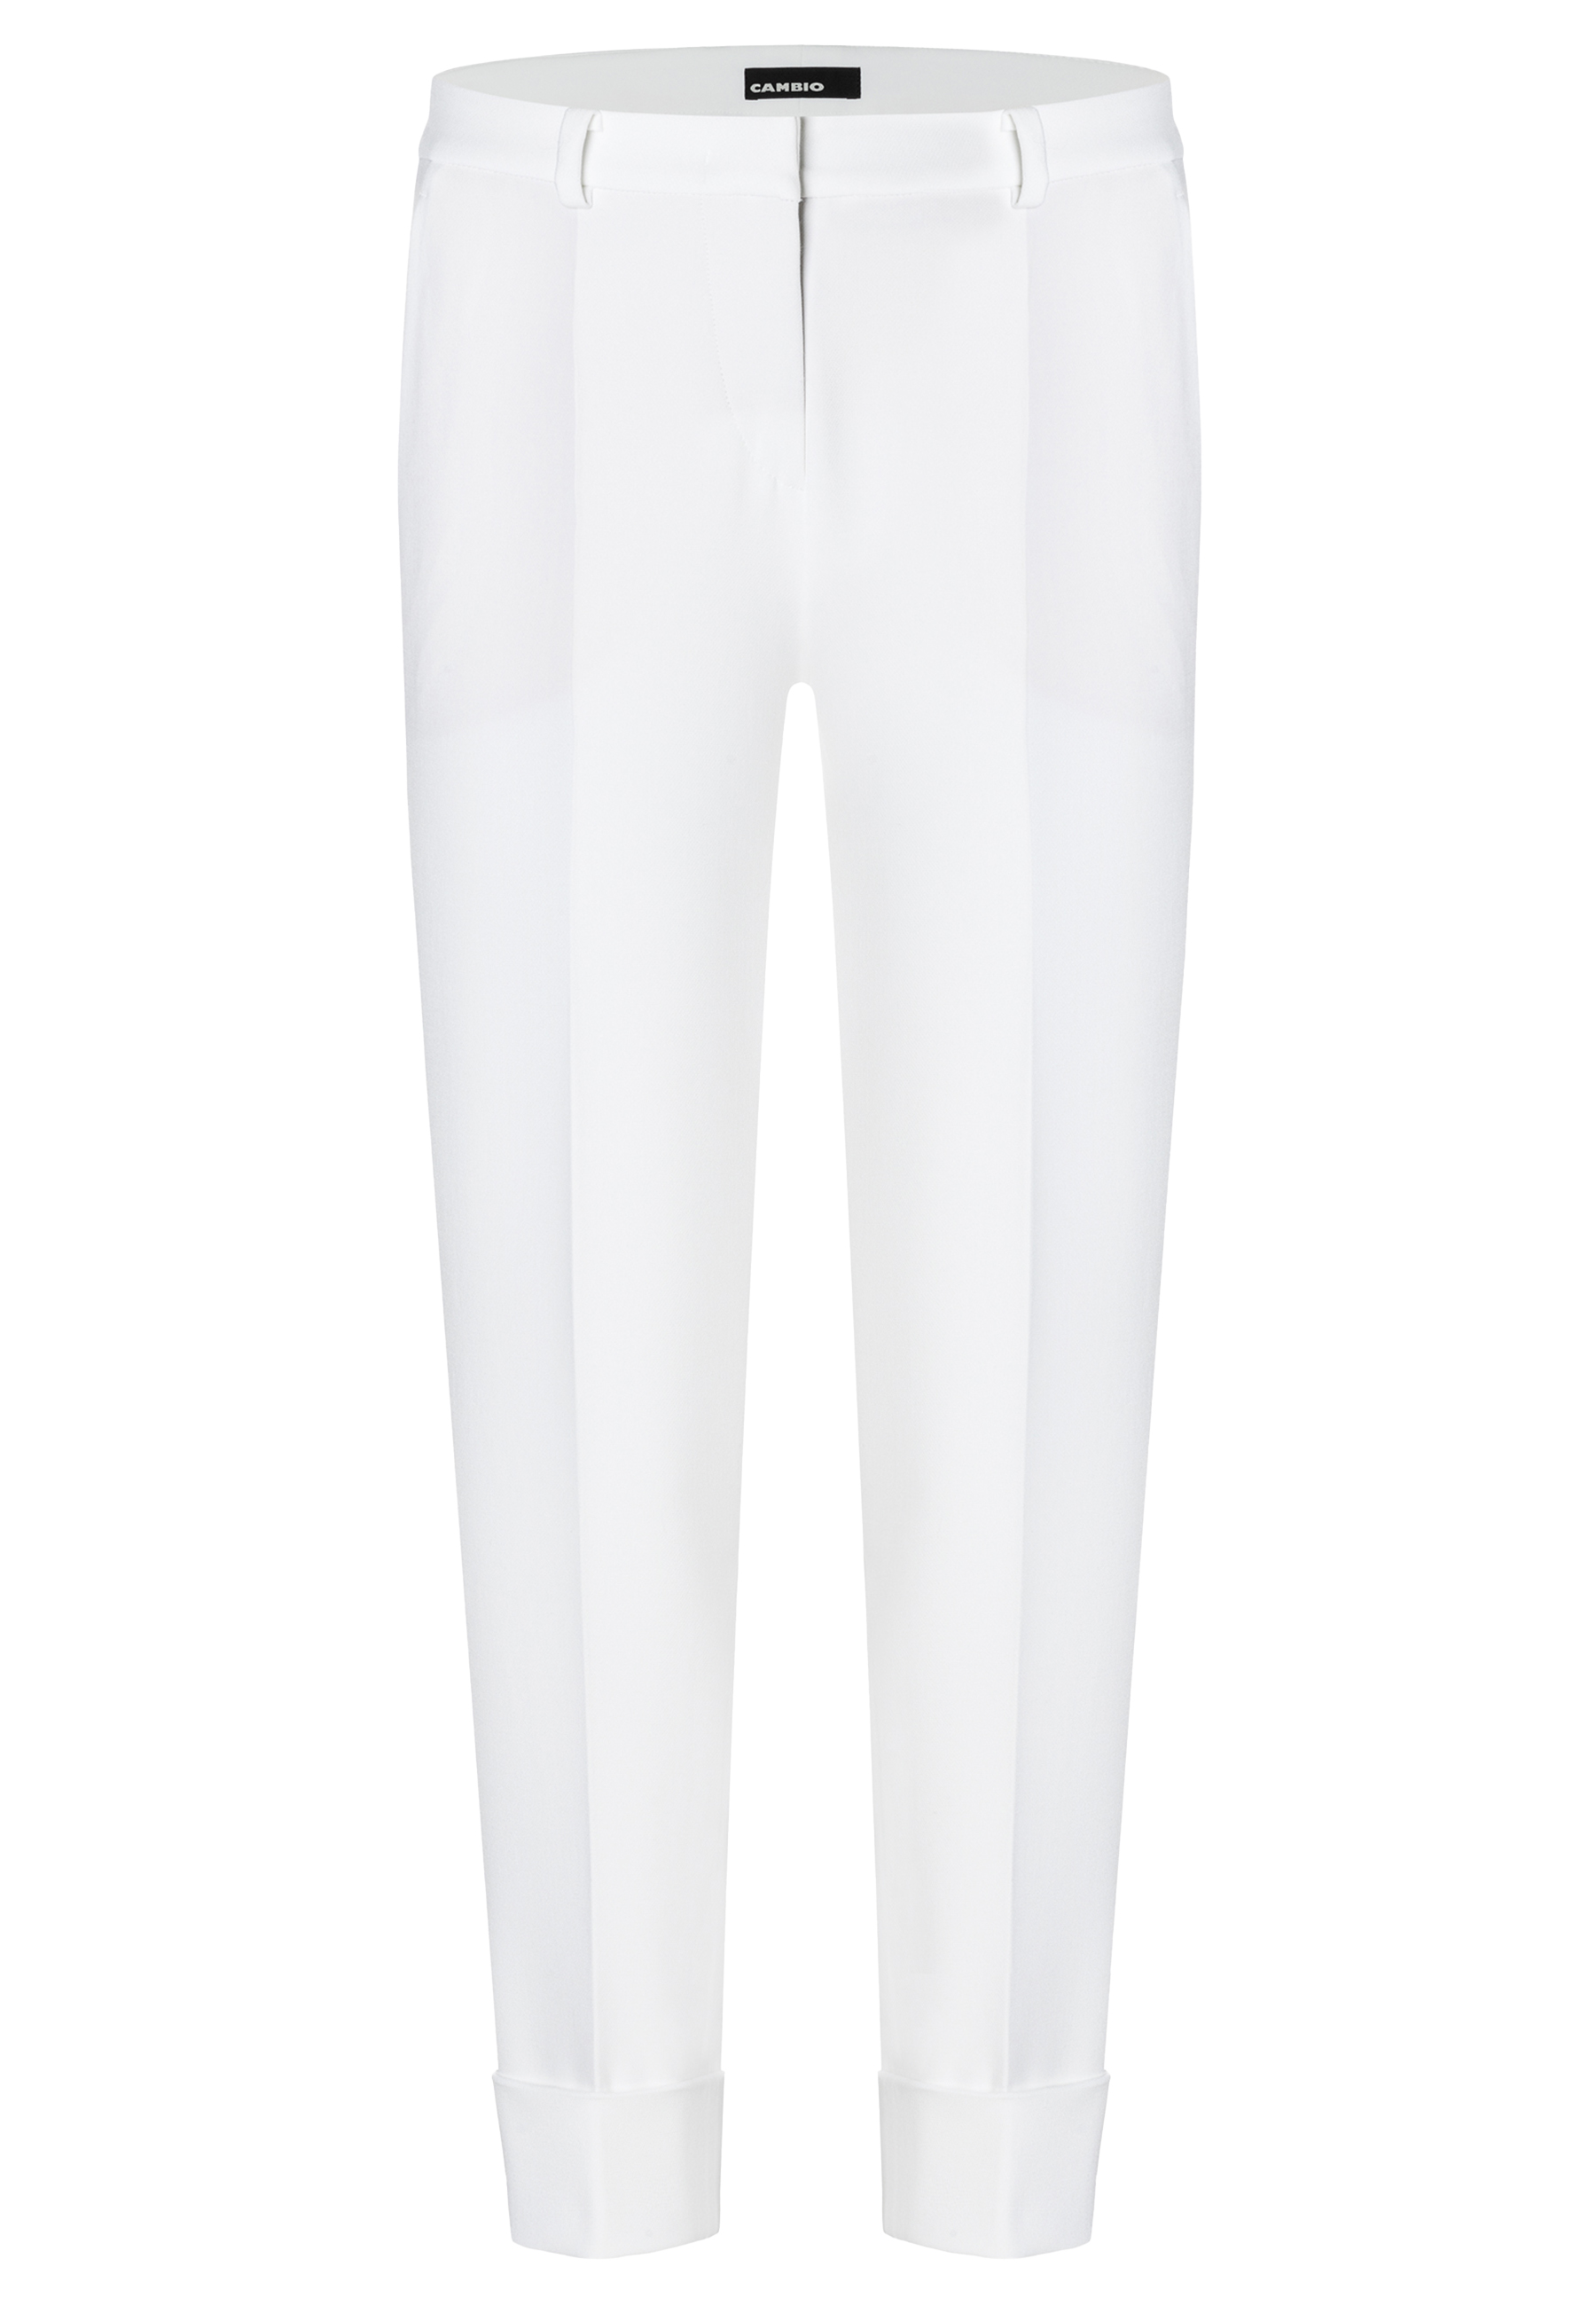 Cambio Broek Off White Polyester maat 34 Krystal pantalons off white